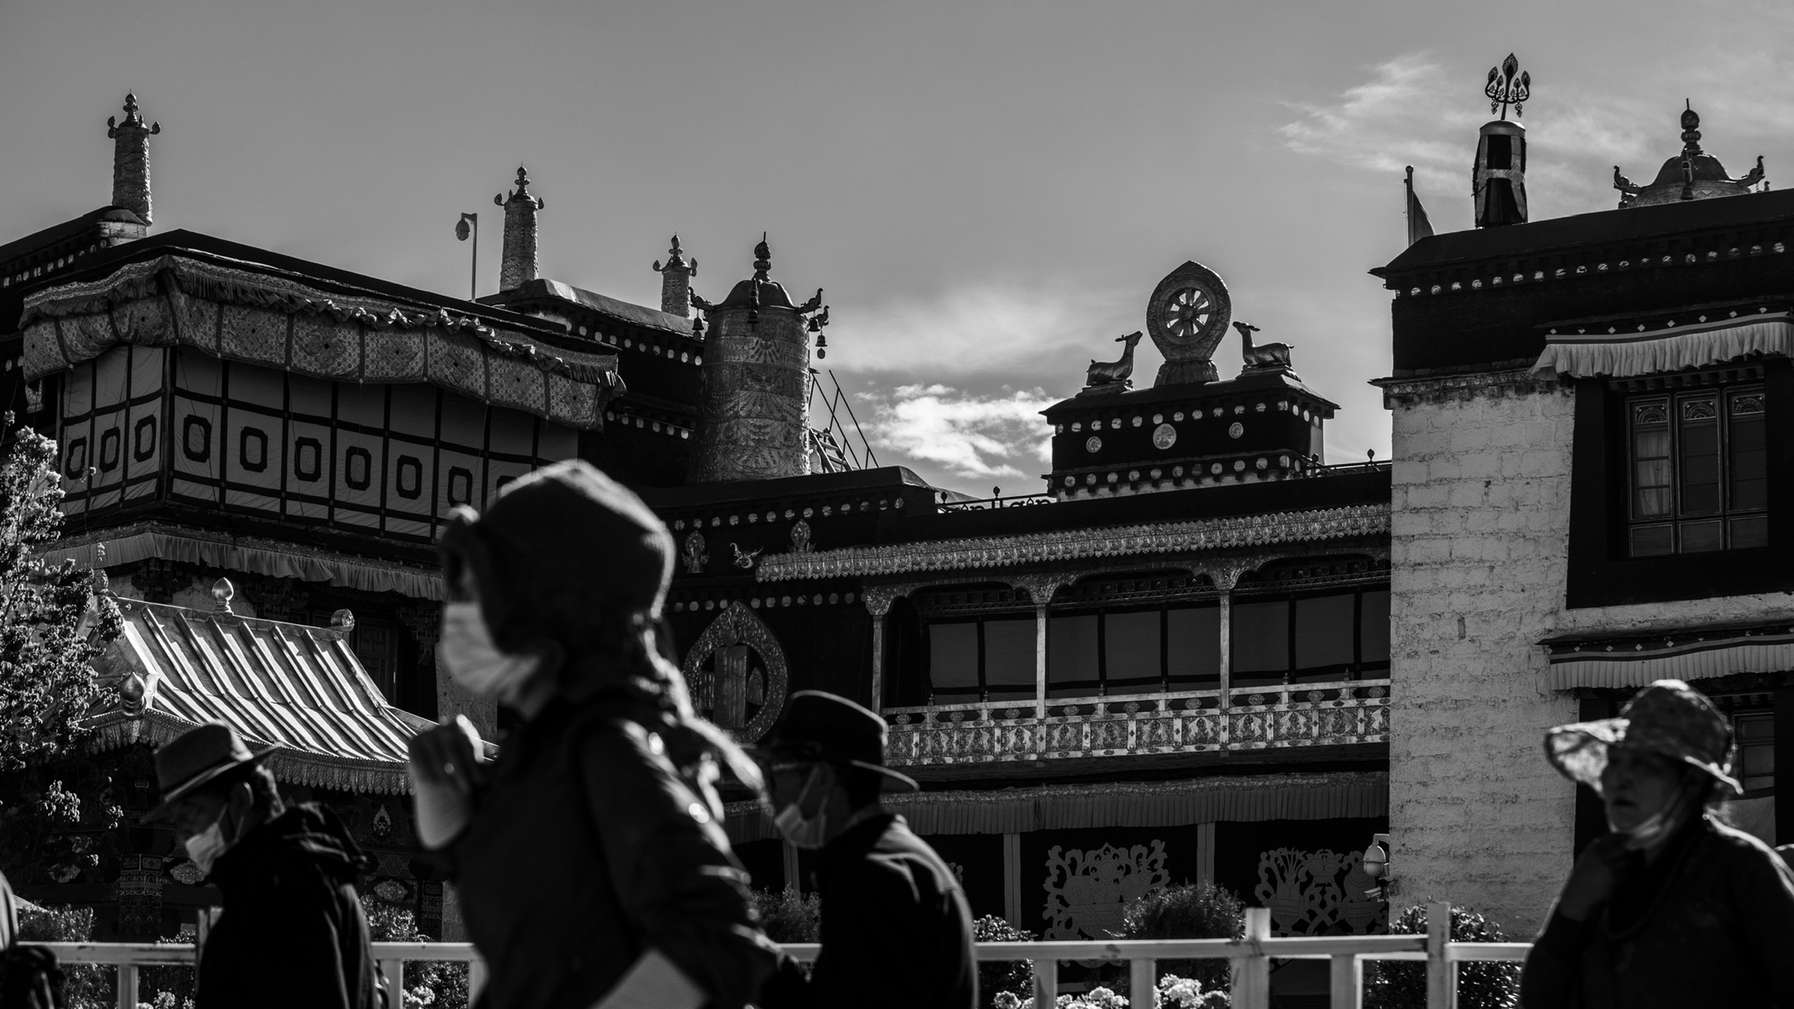 ལྷ་ལྡན་གཙུག་ལག་ཁང་། Jokhang-Temple